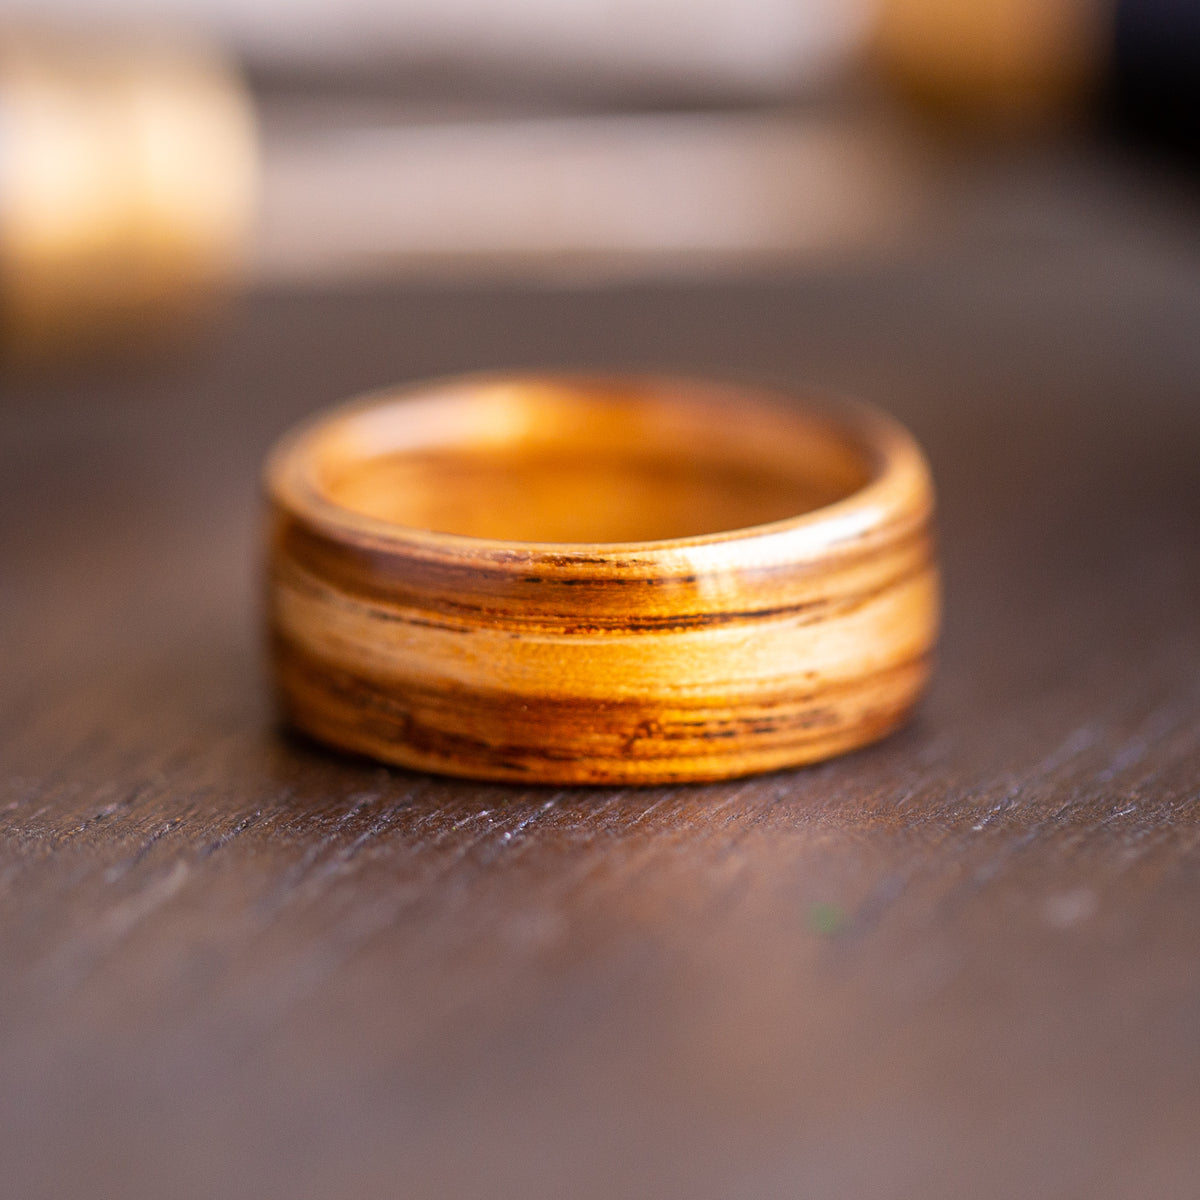 Zebrawood & Walnut Wooden Ring